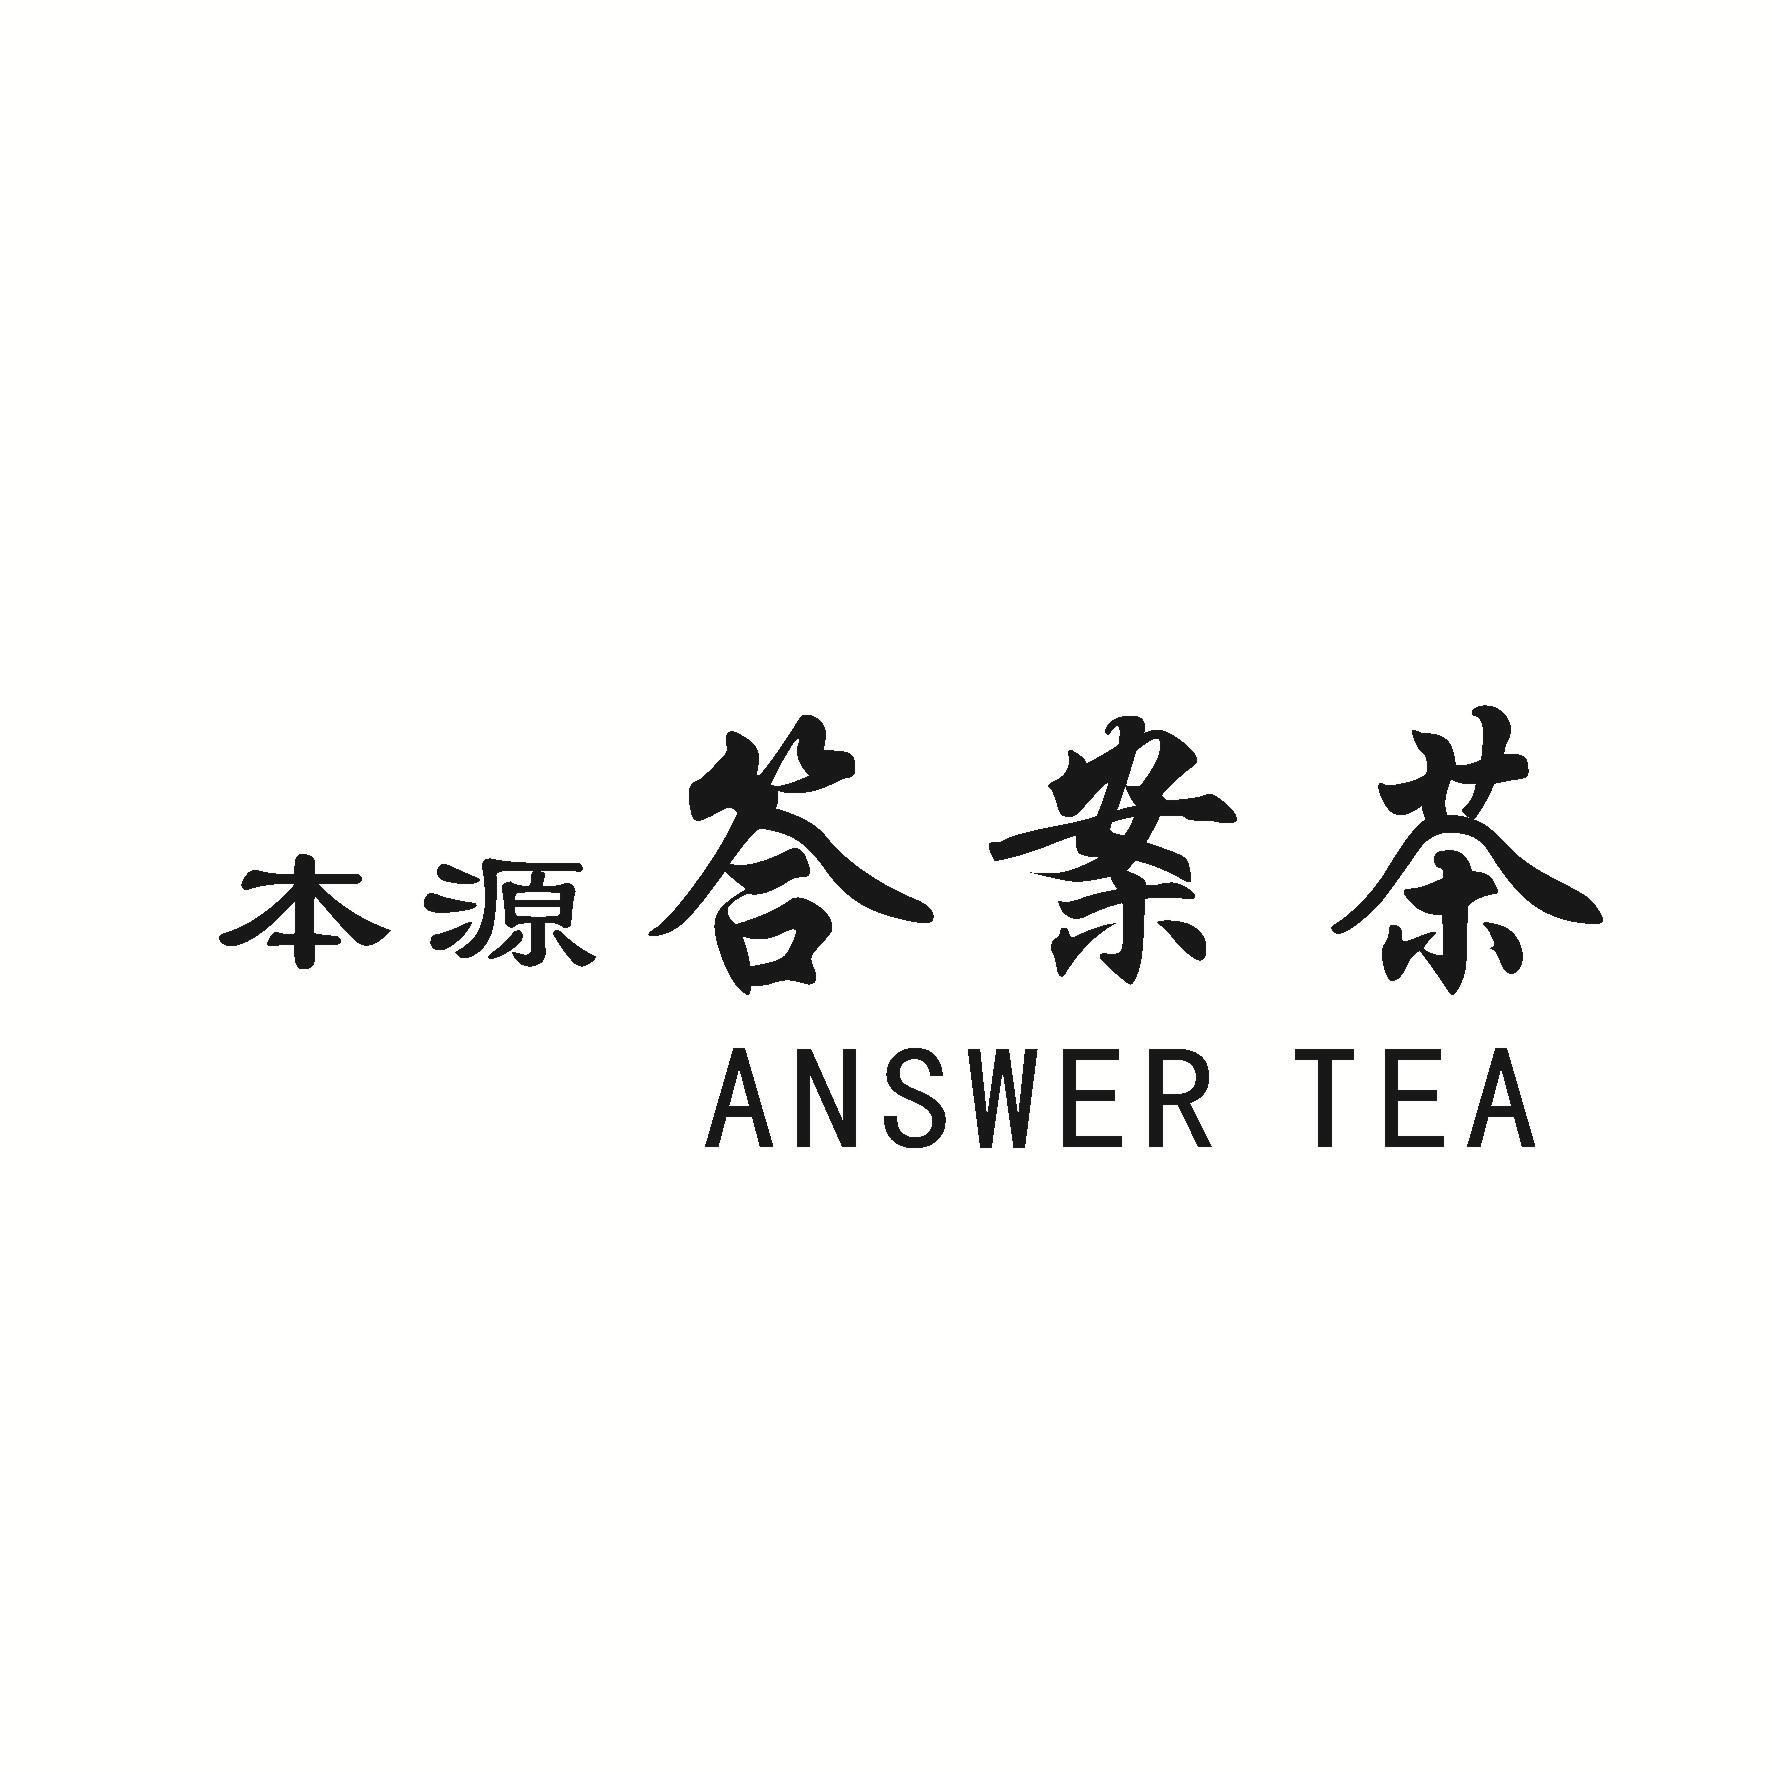 本源答案茶 ANSWER TEA